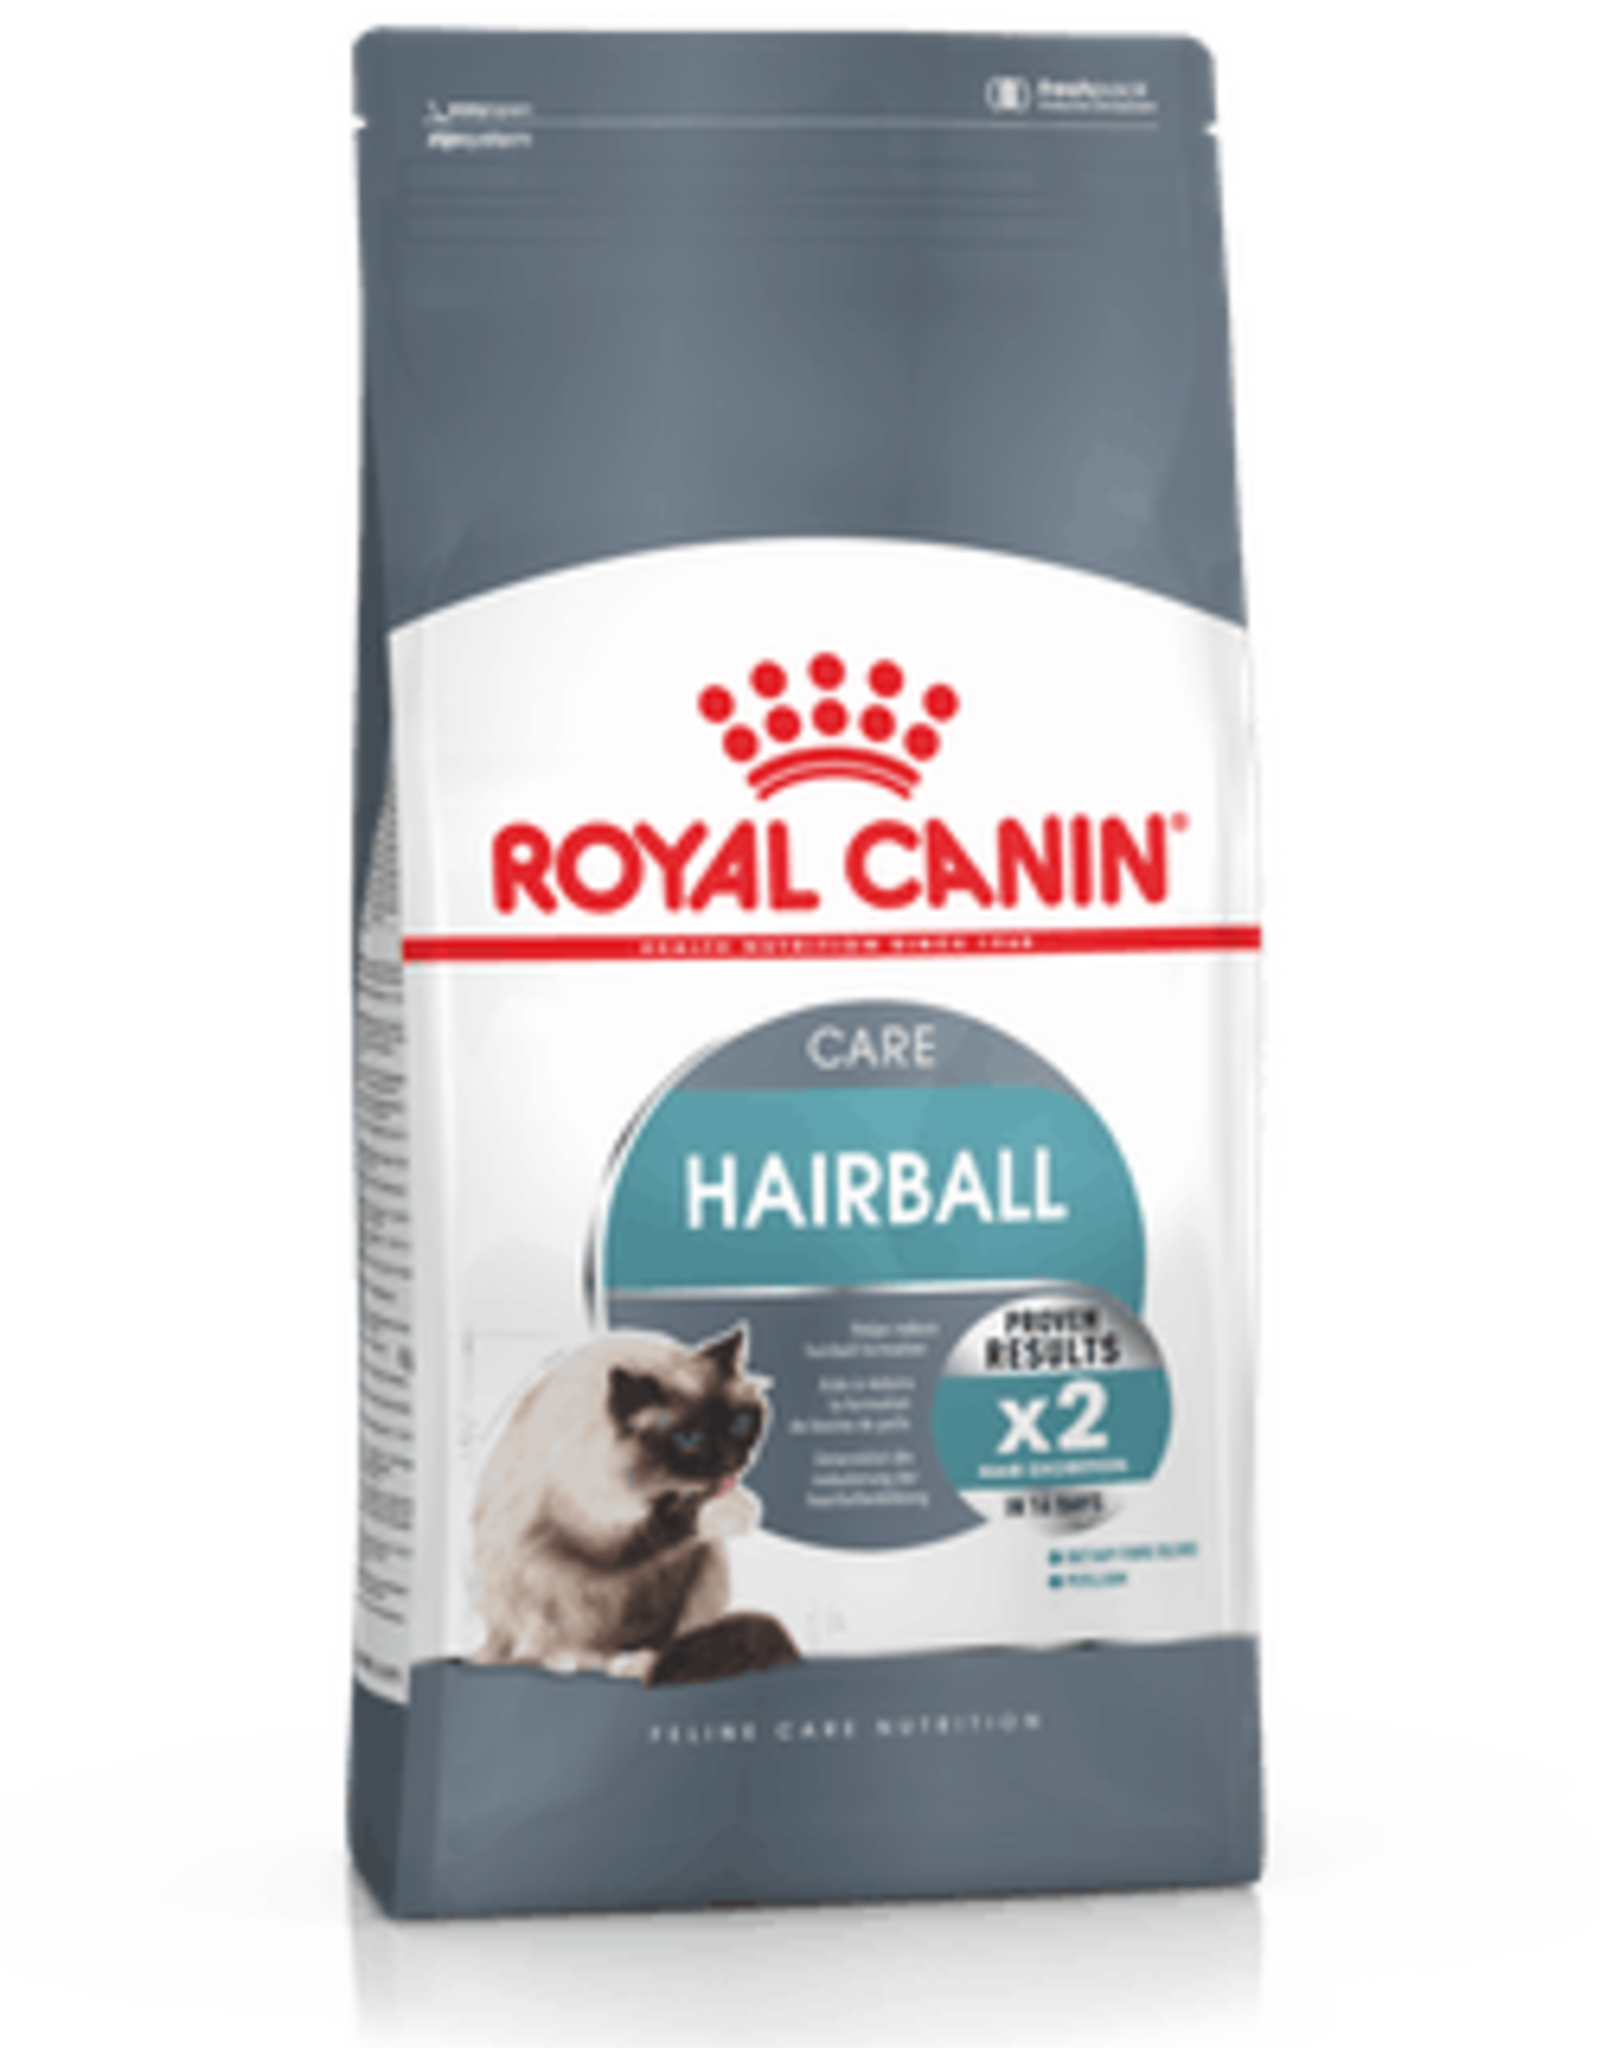 ROYAL CANIN ROYAL CANIN CAT HAIRBALL 34% 6LBS